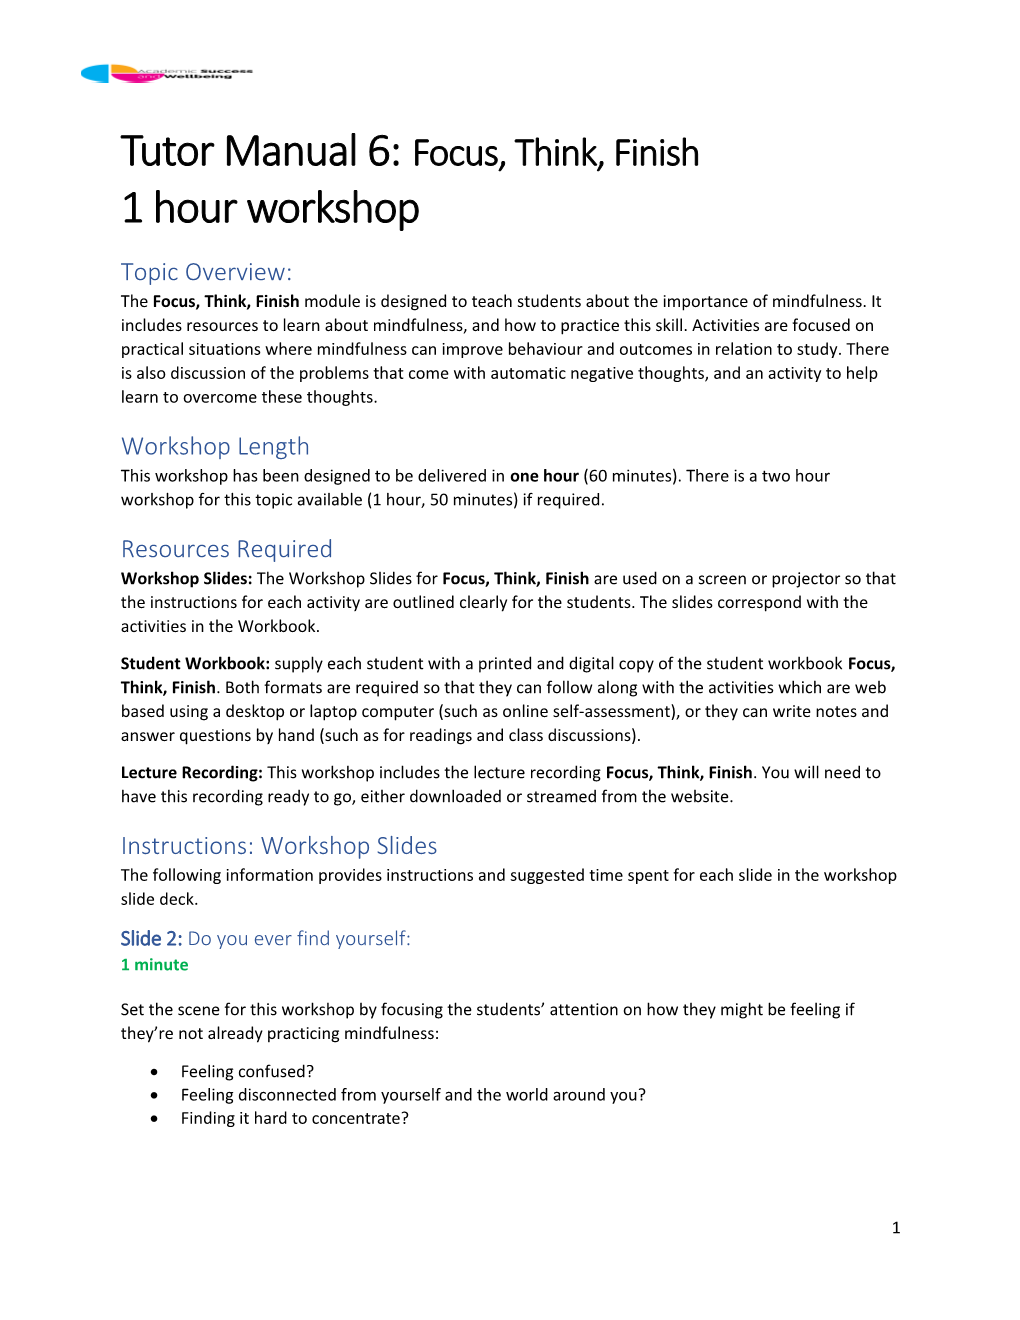 Tutor Manual 6:Focus, Think, Finish 1 Hour Workshop